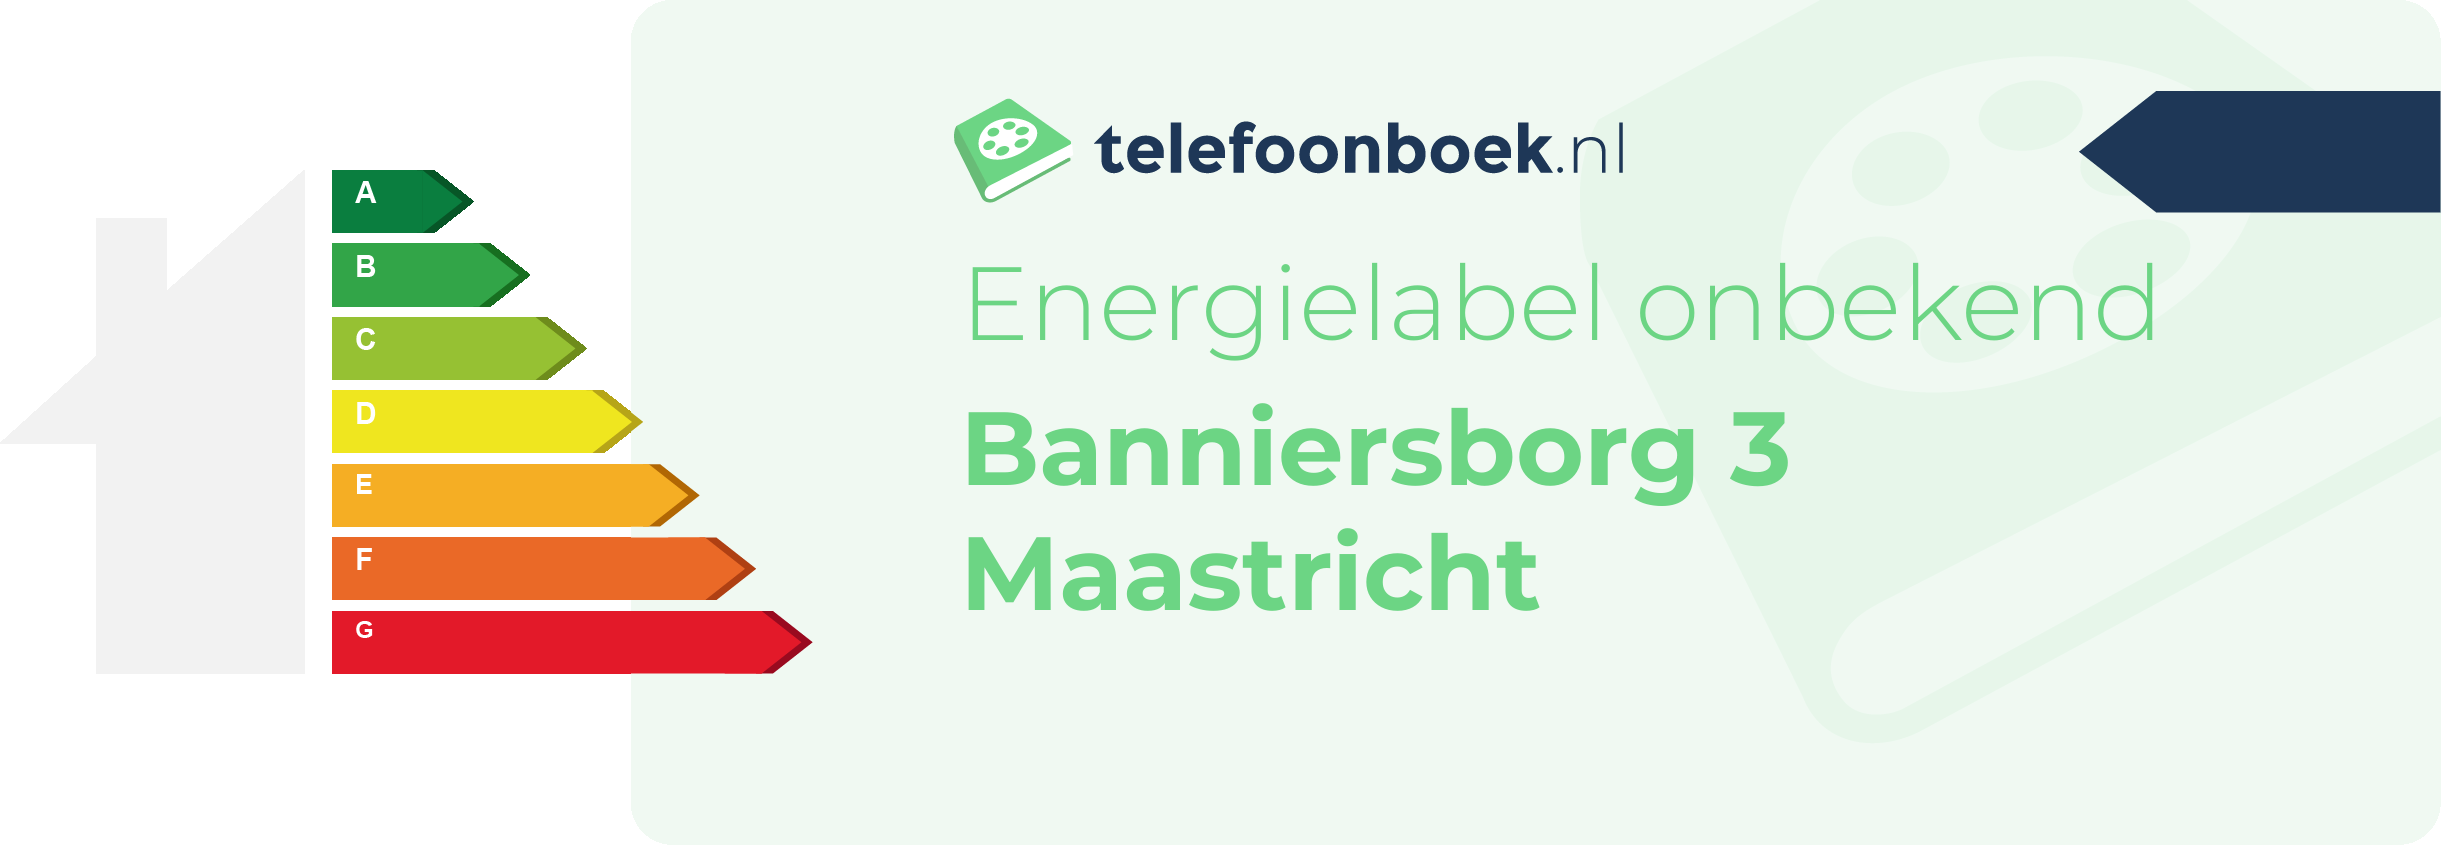 Energielabel Banniersborg 3 Maastricht